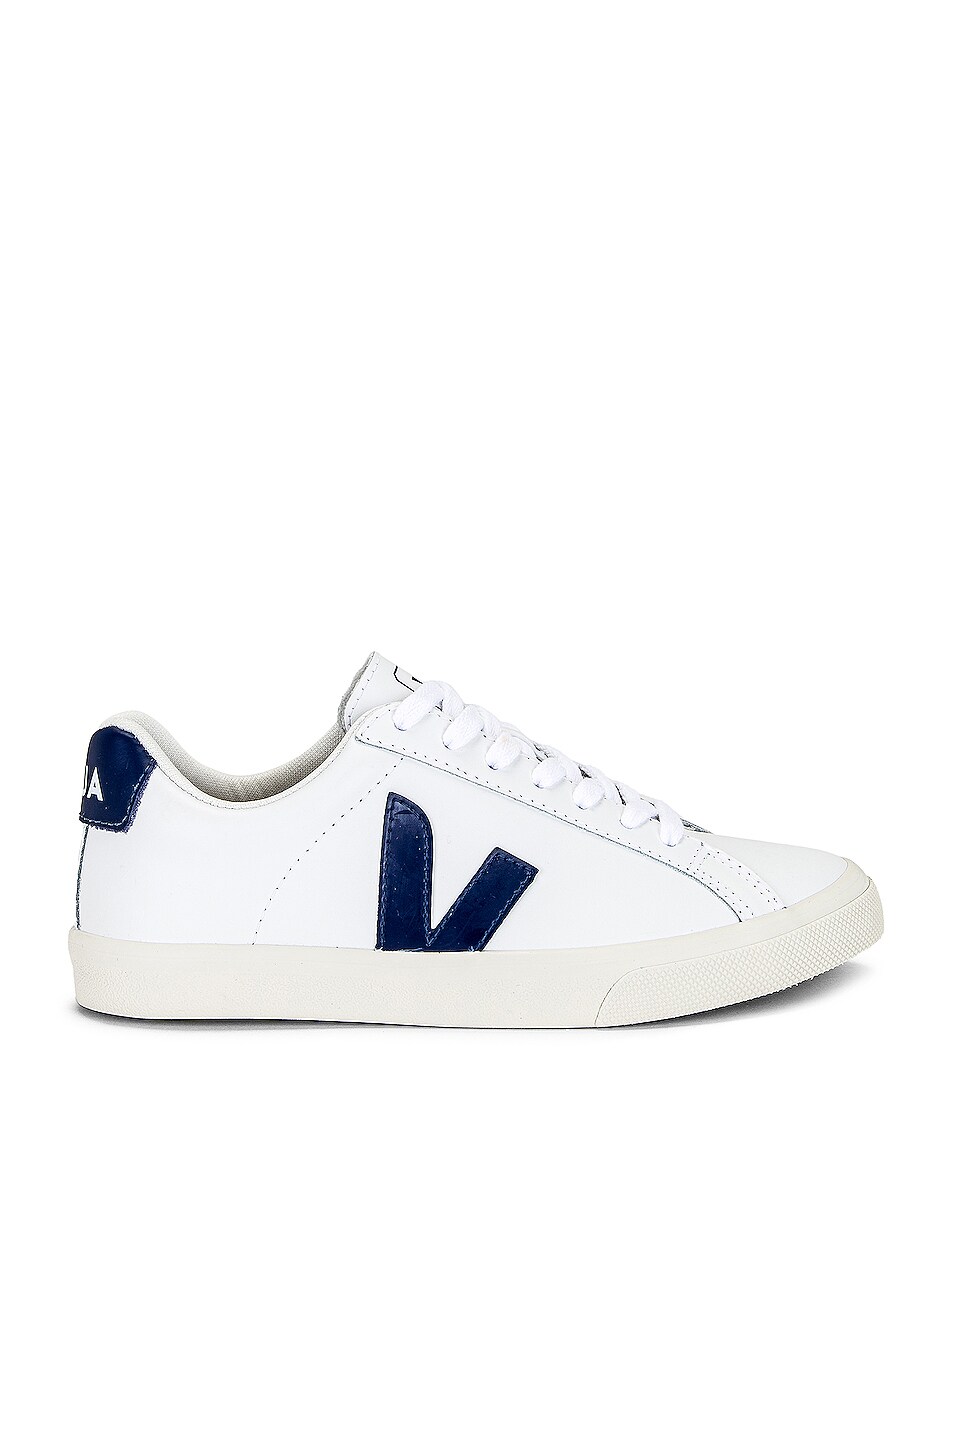 Image 1 of Veja Esplar Sneaker in Extra White & Cobalt